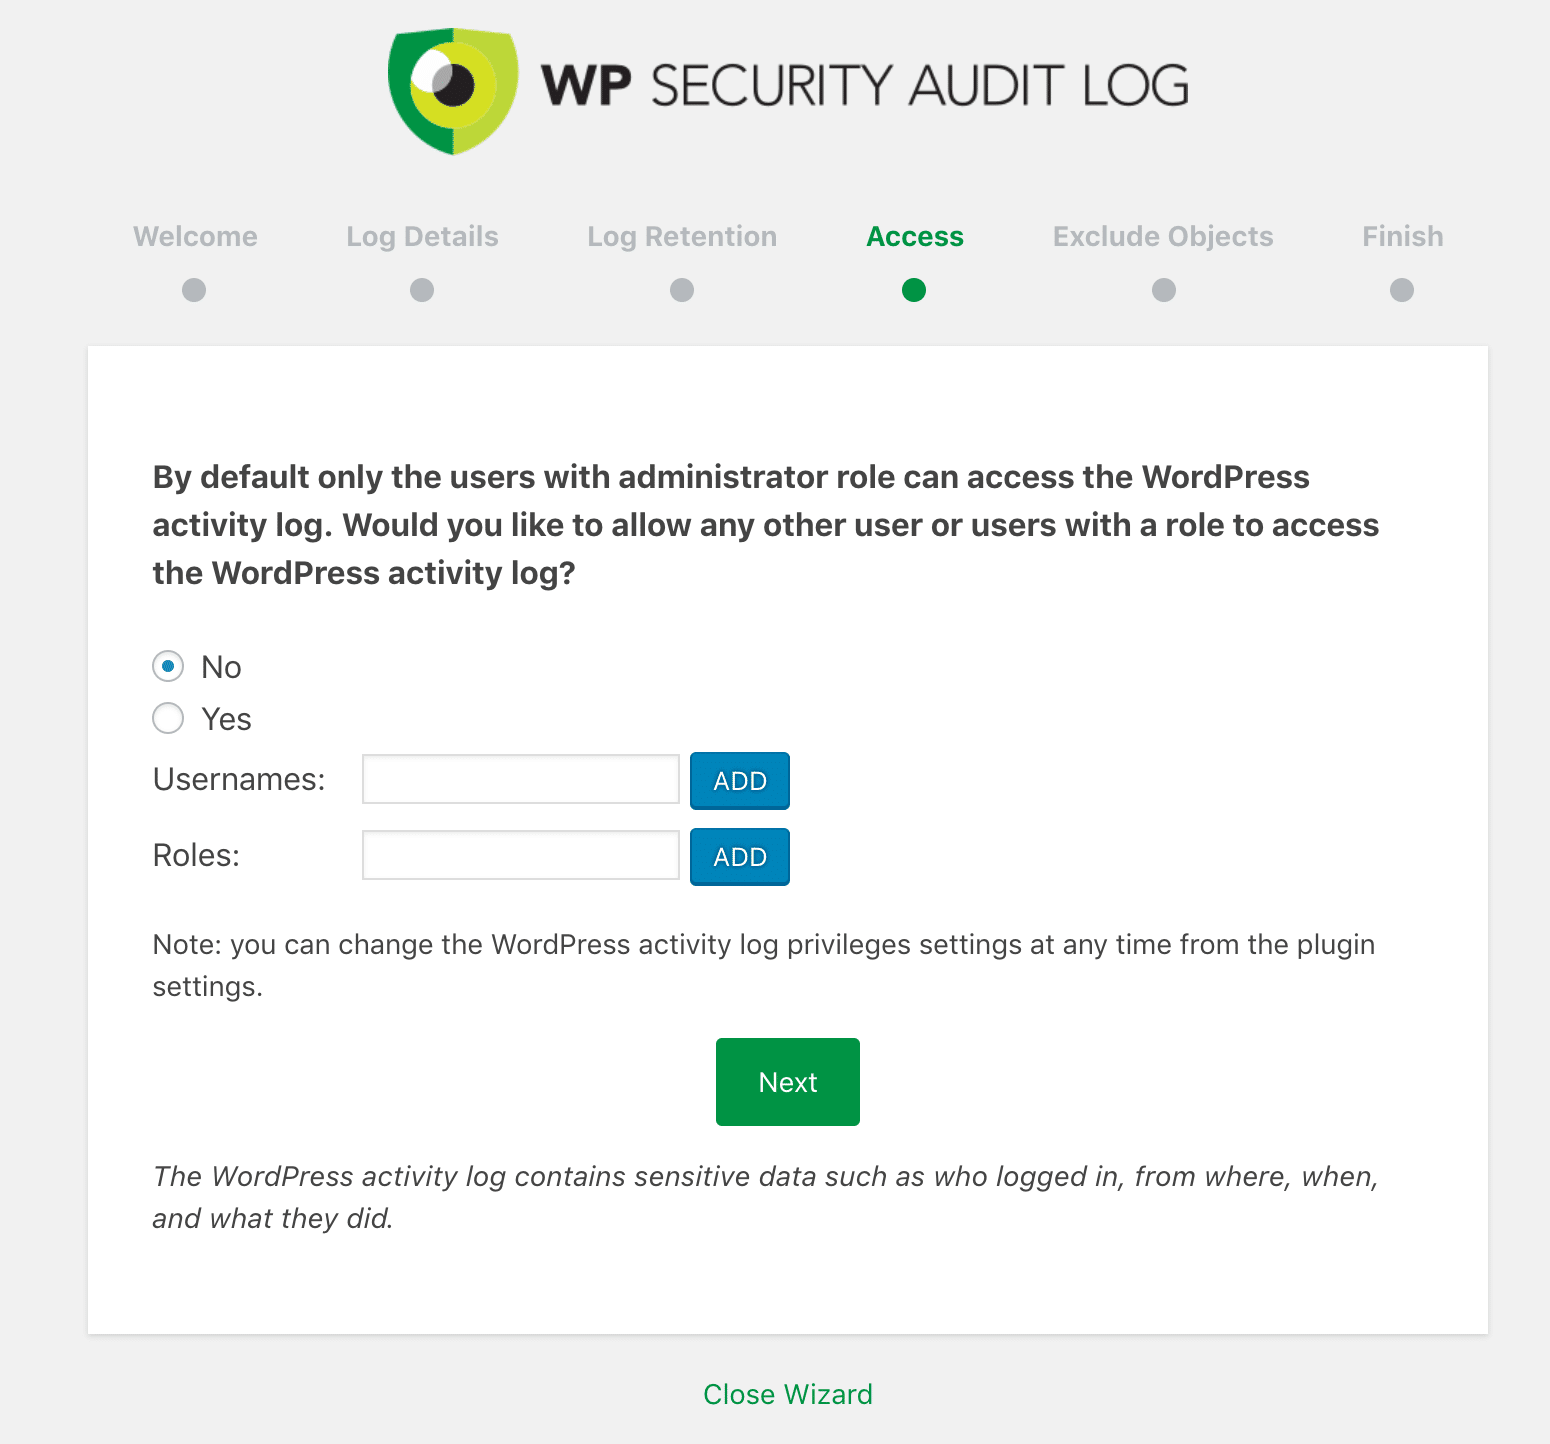 WP Security Audit Log access